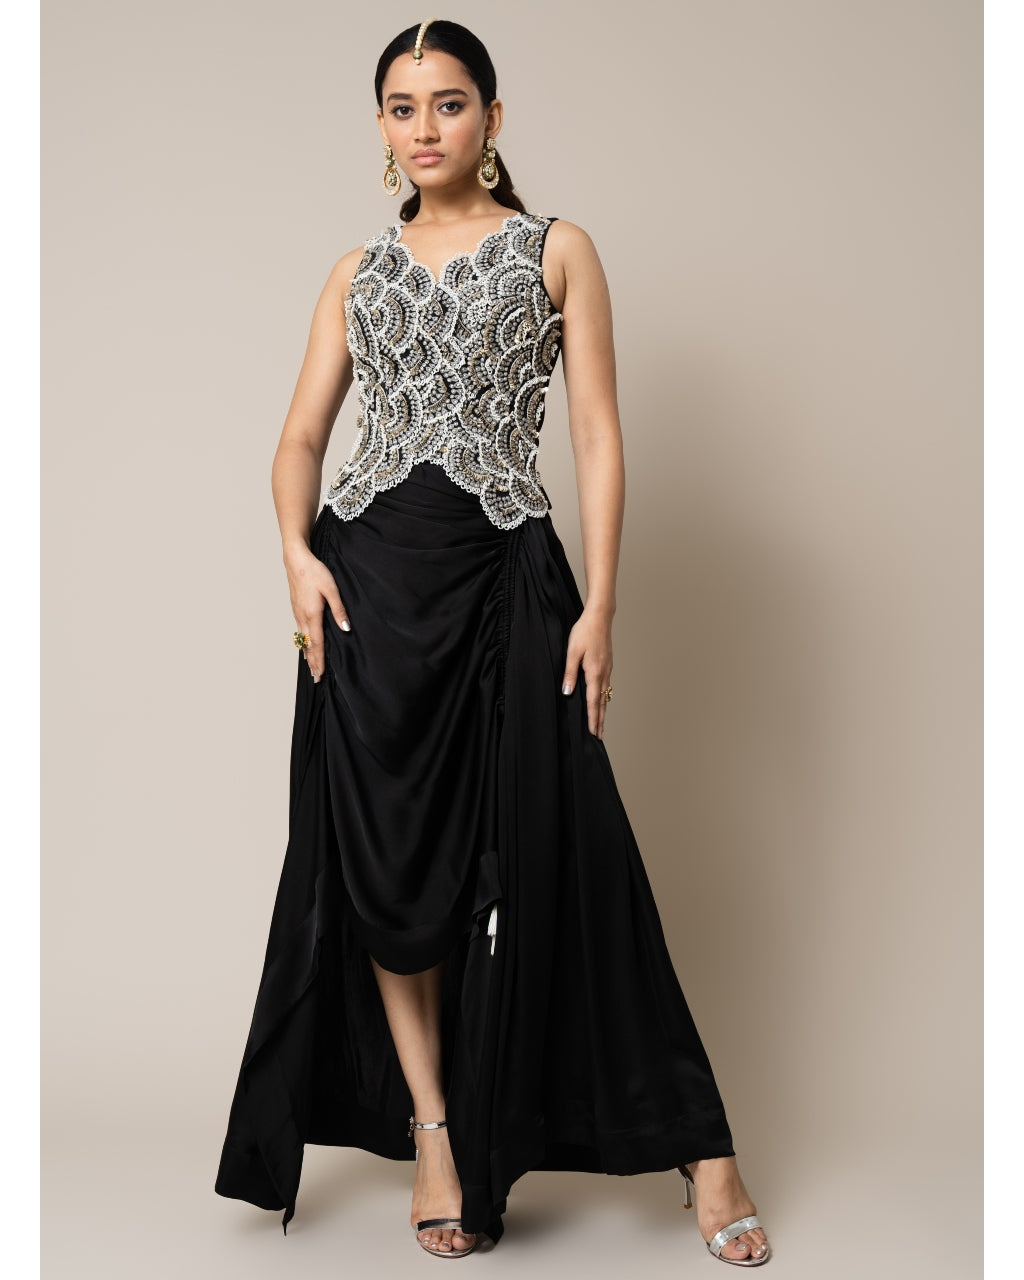 Black color anarkali Indo-Western gown – Panache Haute Couture